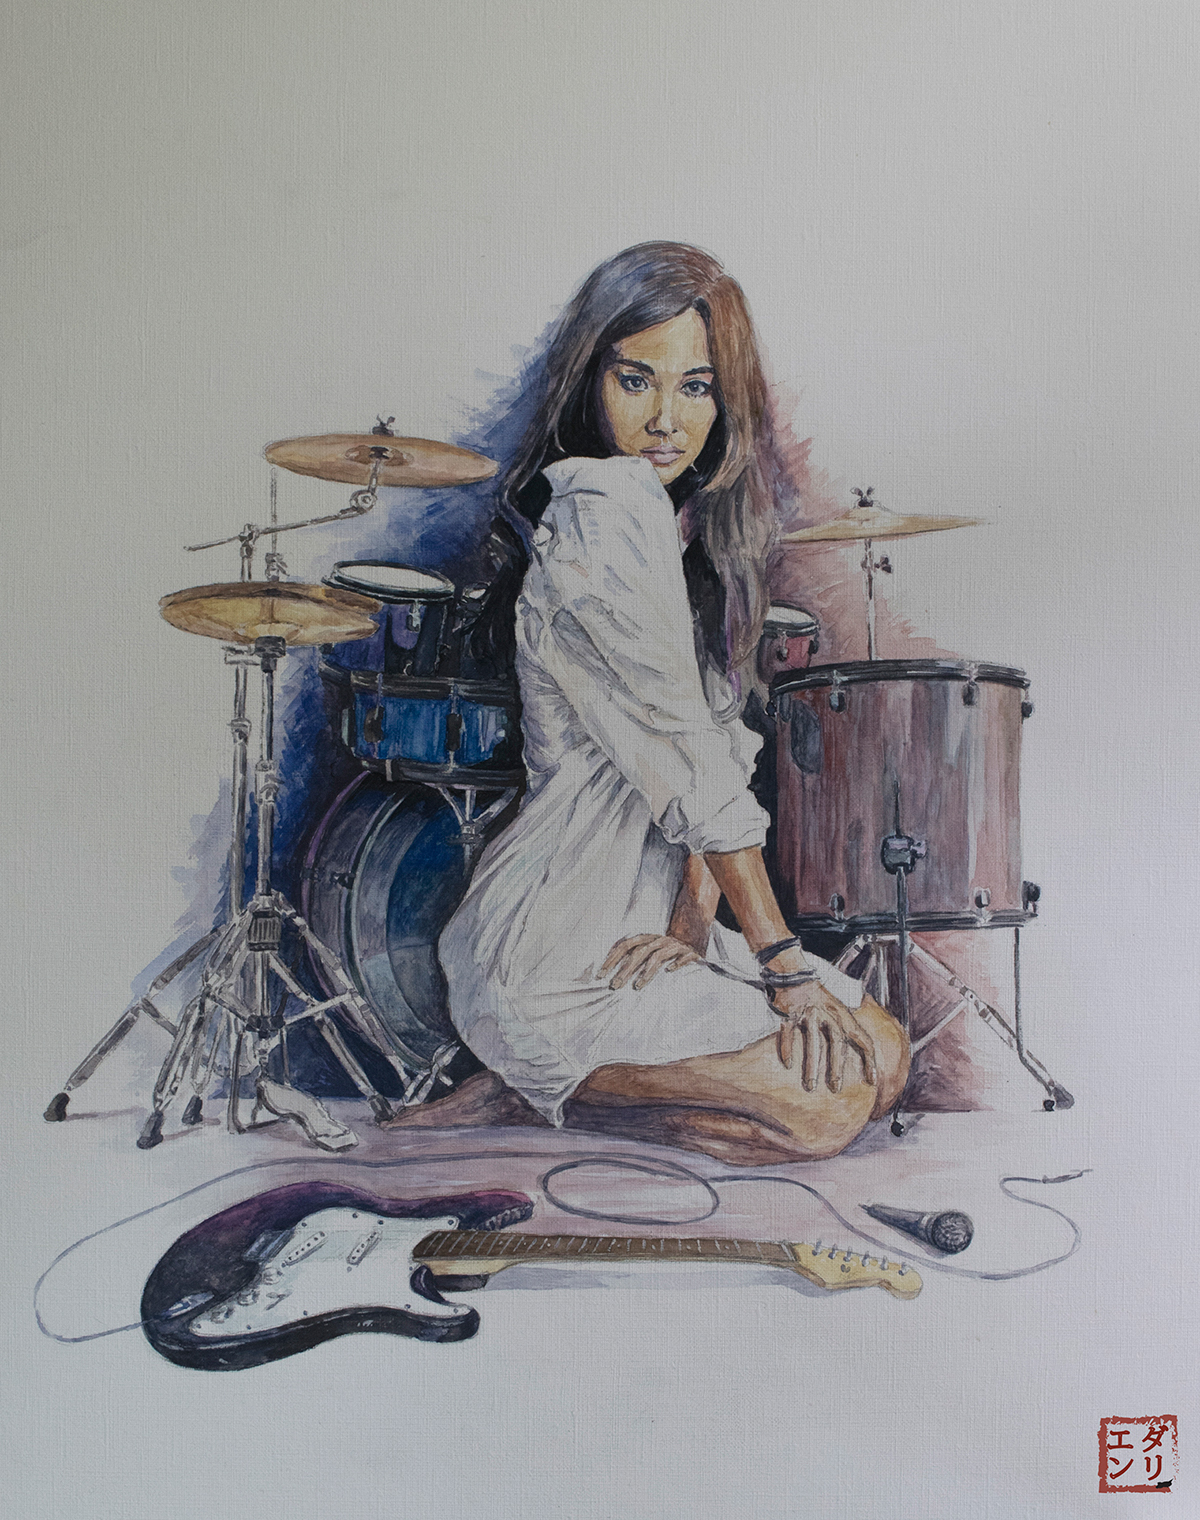 drums percussion Korea kpop fei miss a Saya gouache canvas art creative portrait